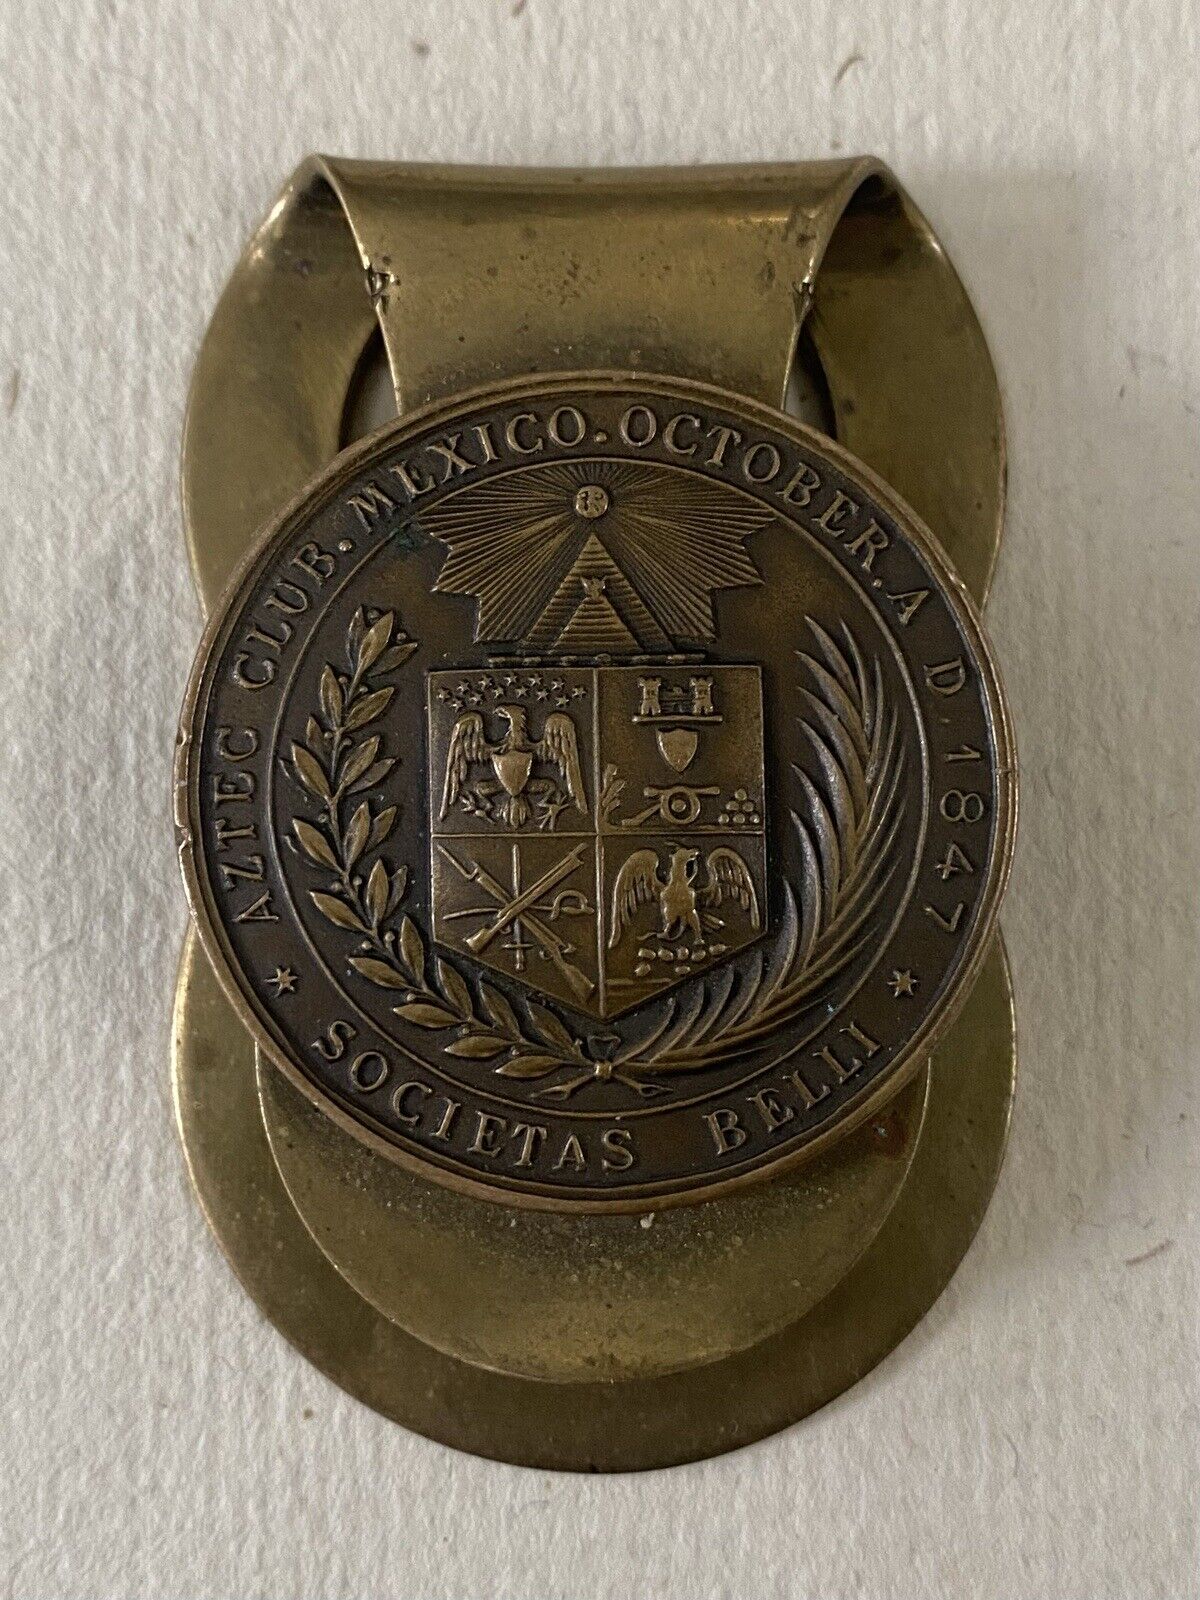 🔥 Very RARE Mexican American War AZTEC CLUB 1847 Medal TIFFANY Money Clip, WOW